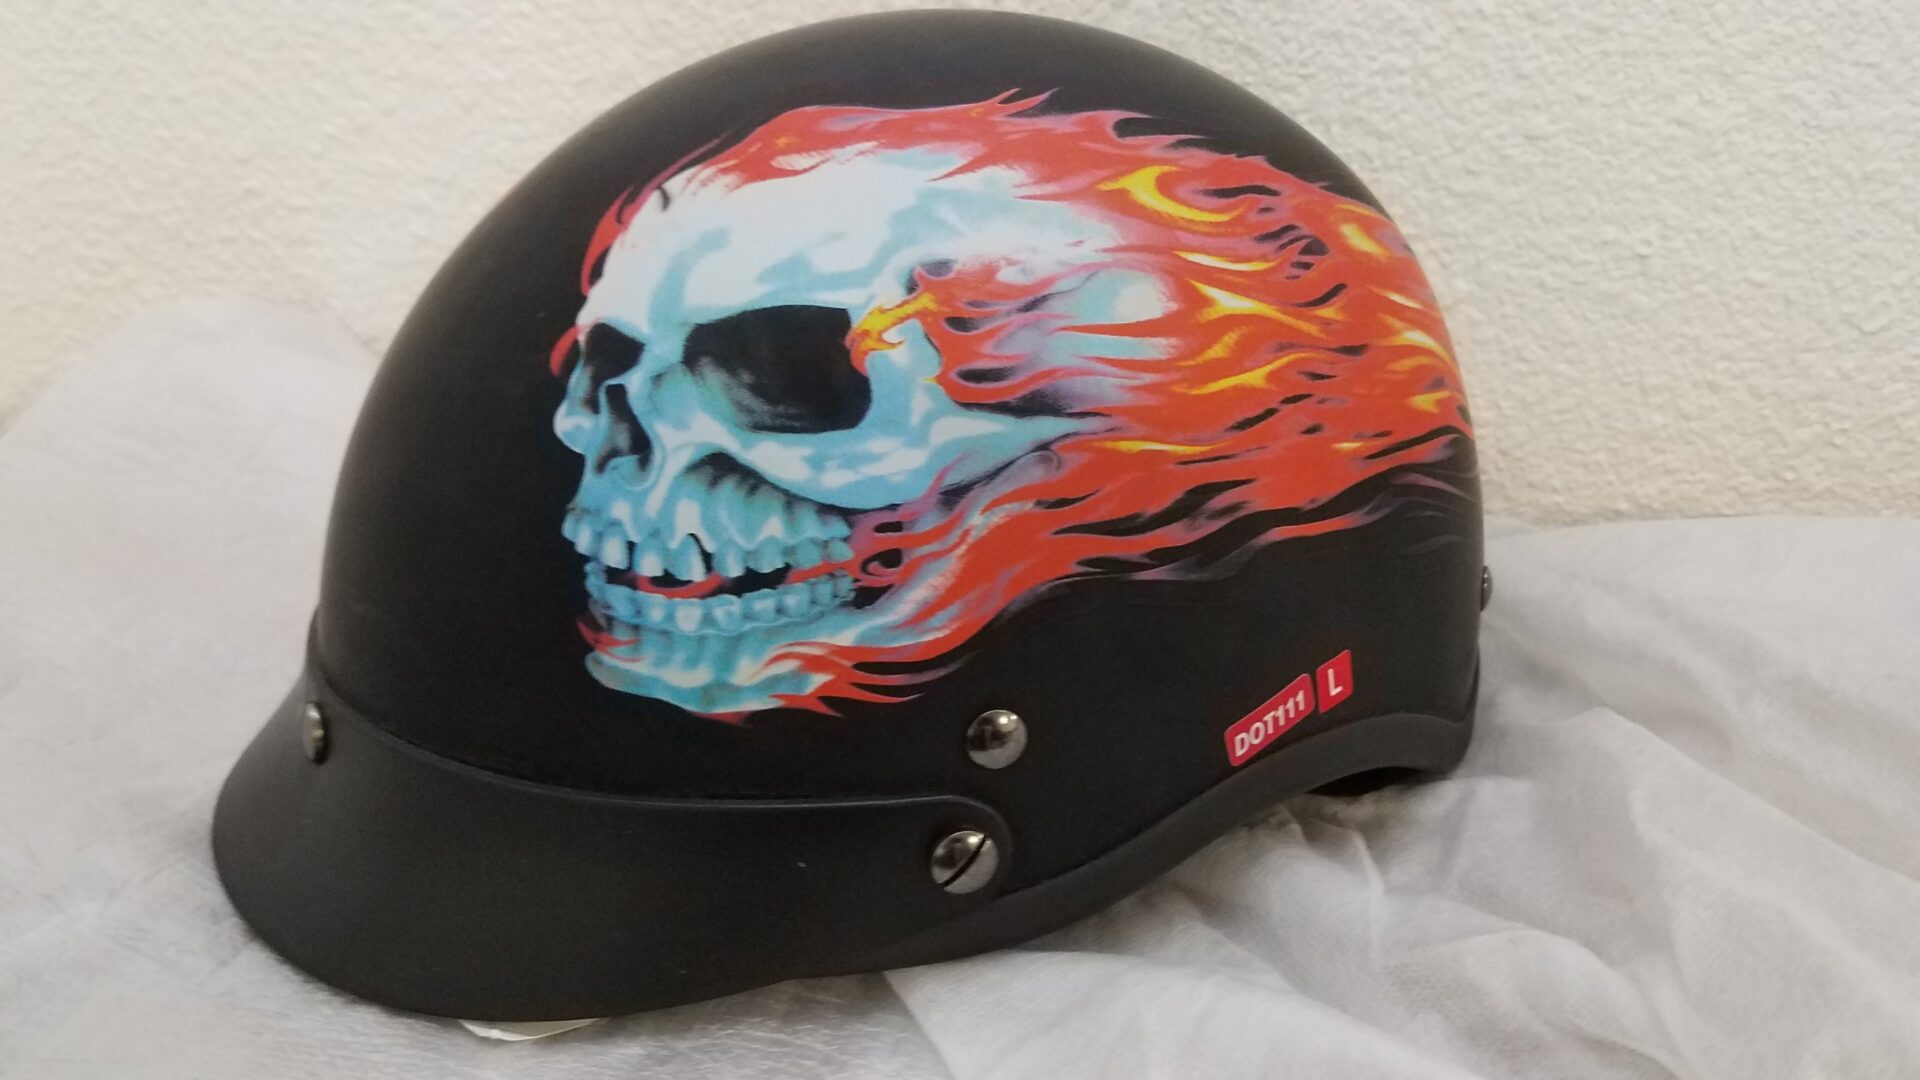 Black helmet with flaming skull decal